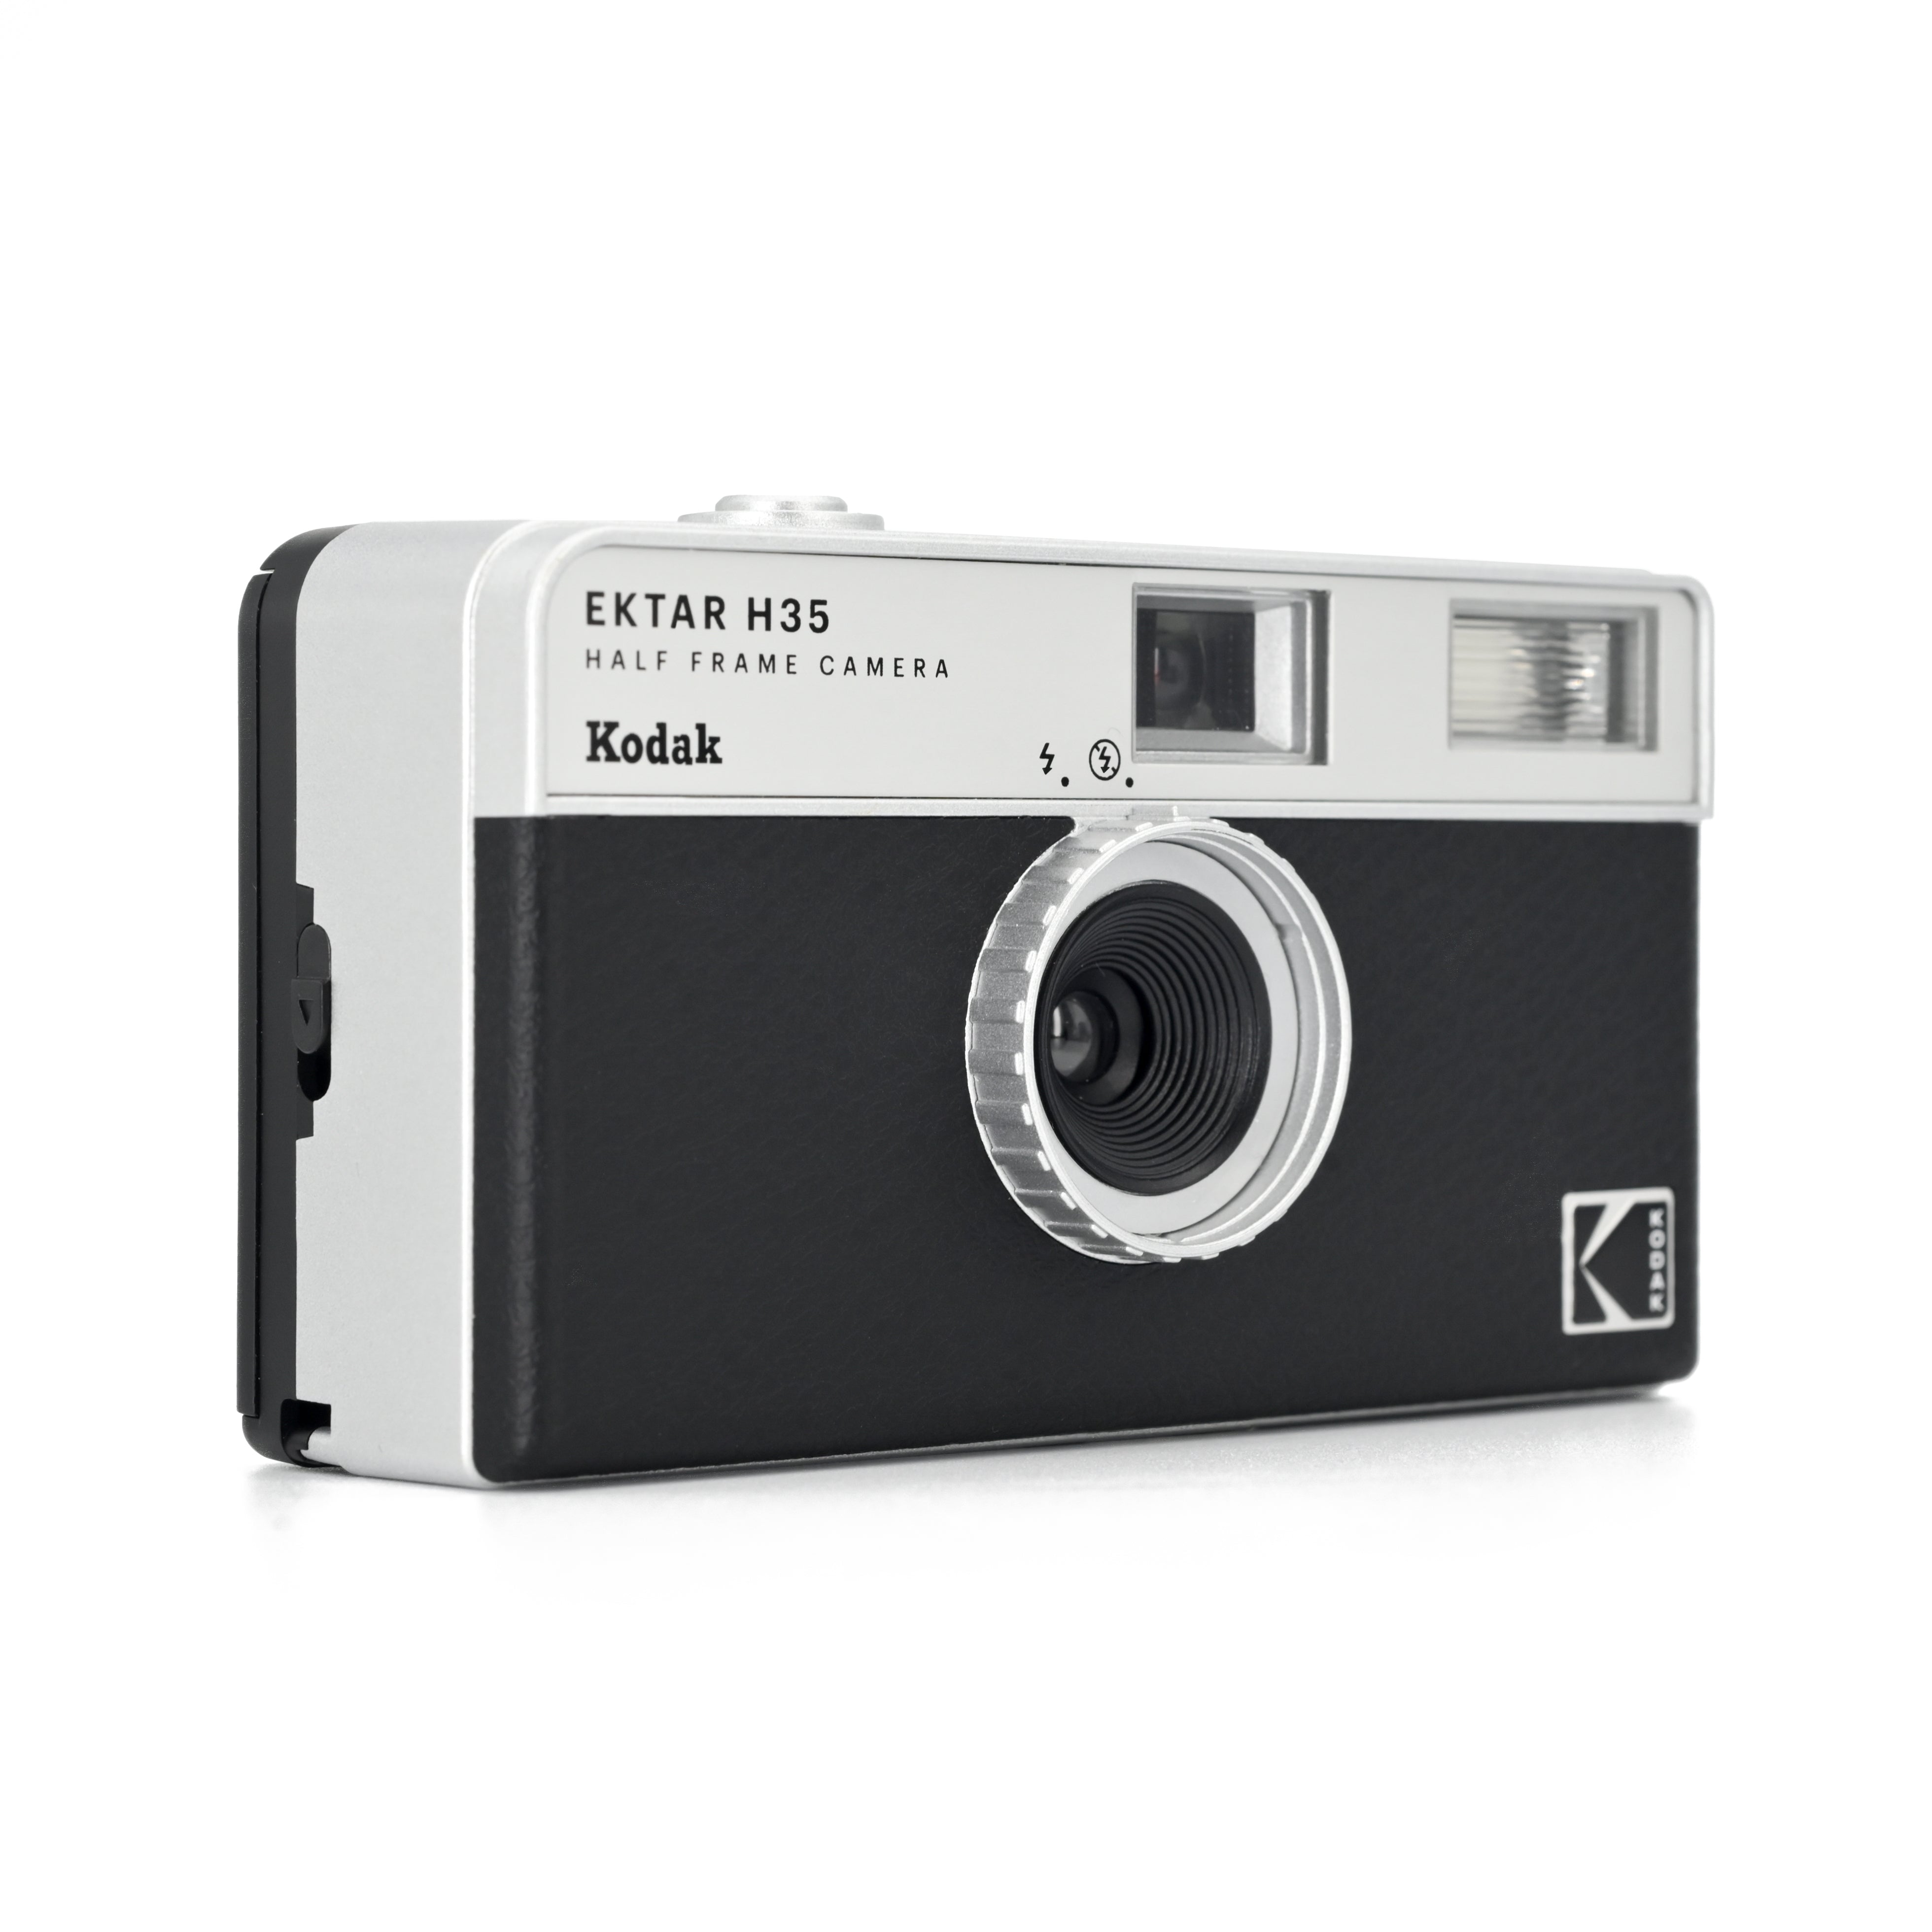 Kodak extar h35 ブラック